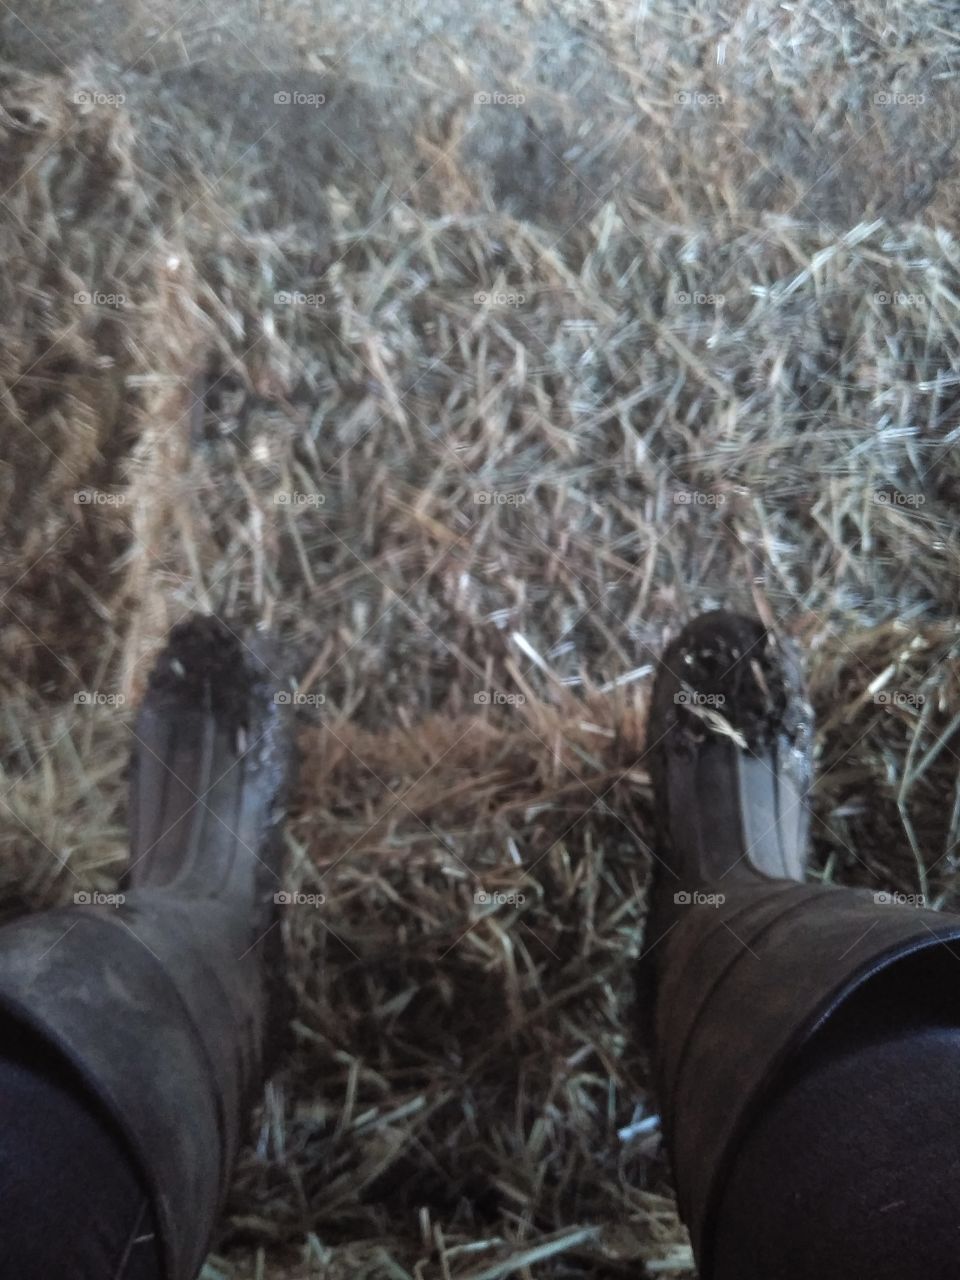 My muddy feet